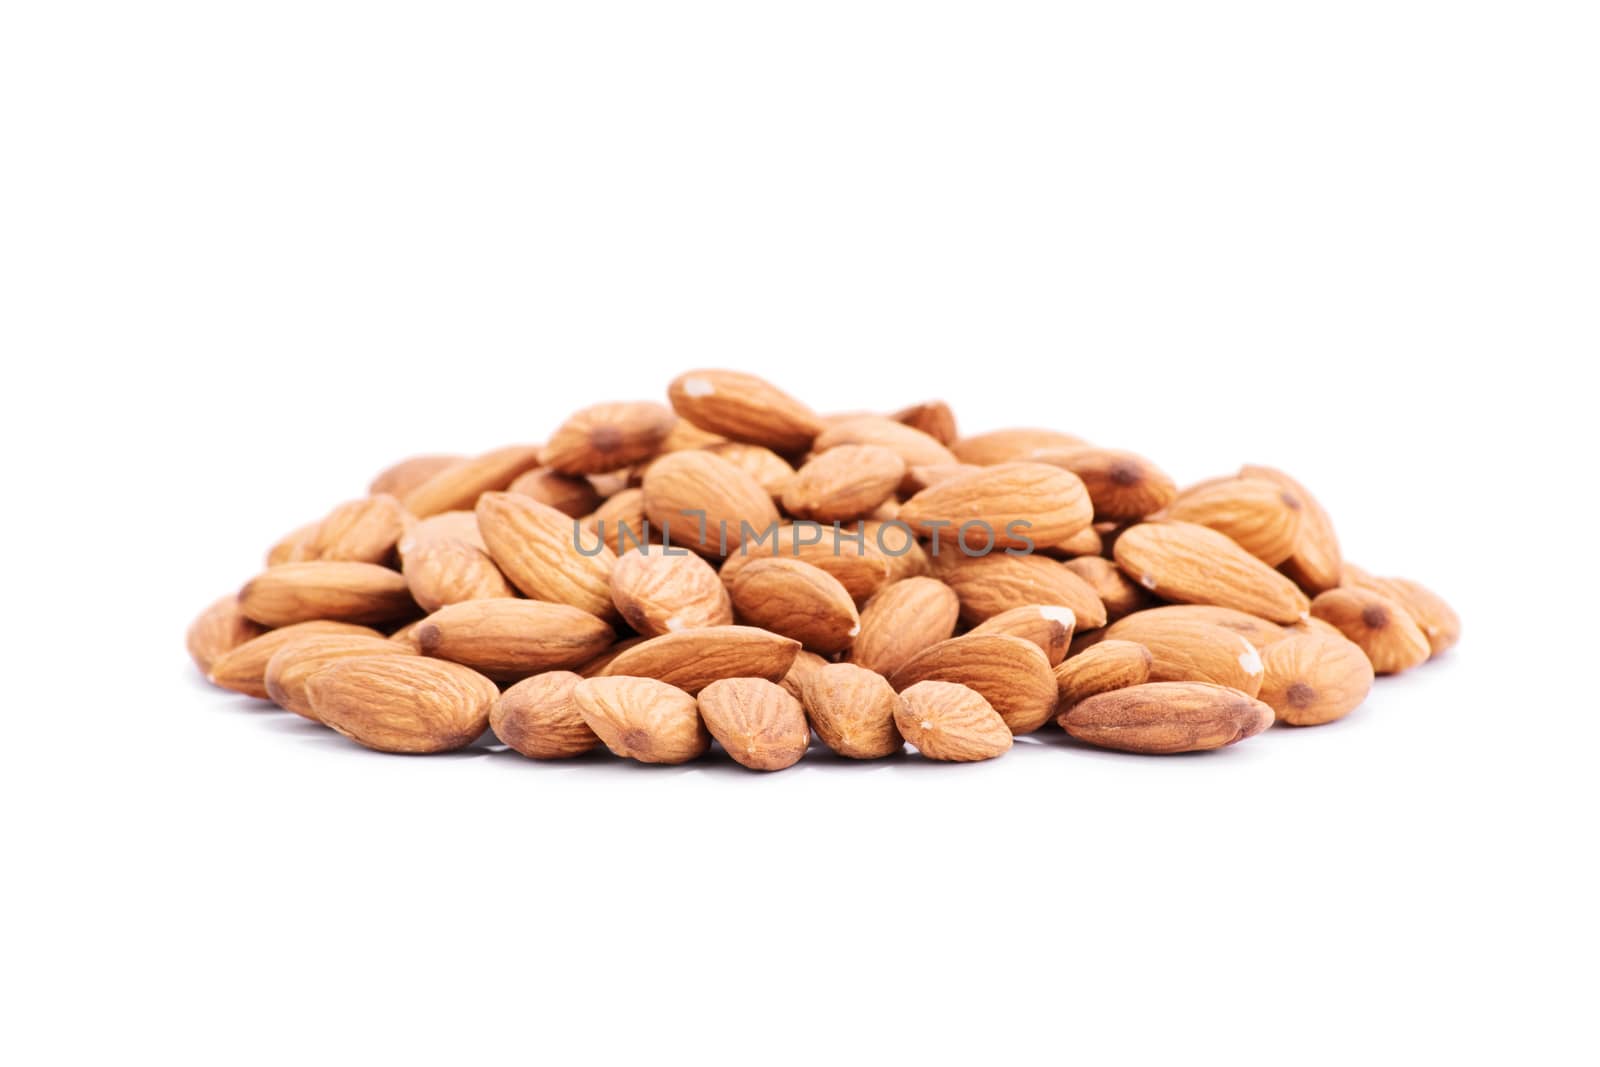 Almonds by Mendelex